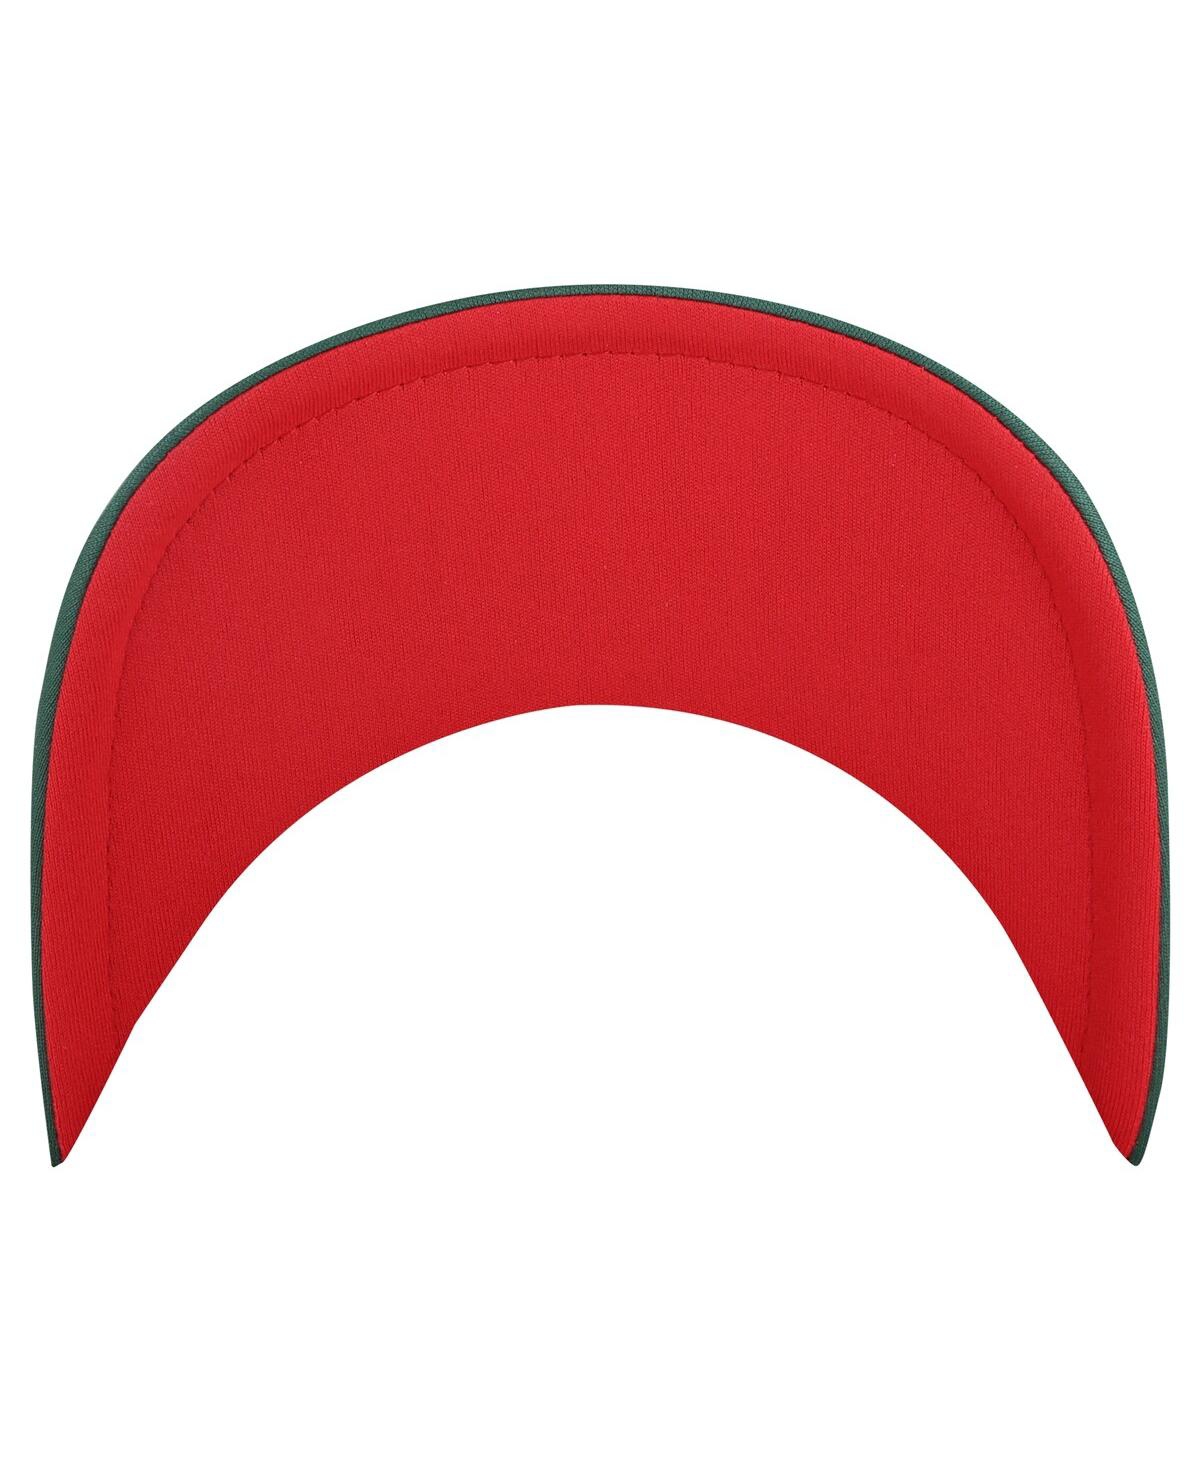 Shop 47 Brand Men's Green Minnesota Wild Sideband Stripes Trucker Snapback Hat